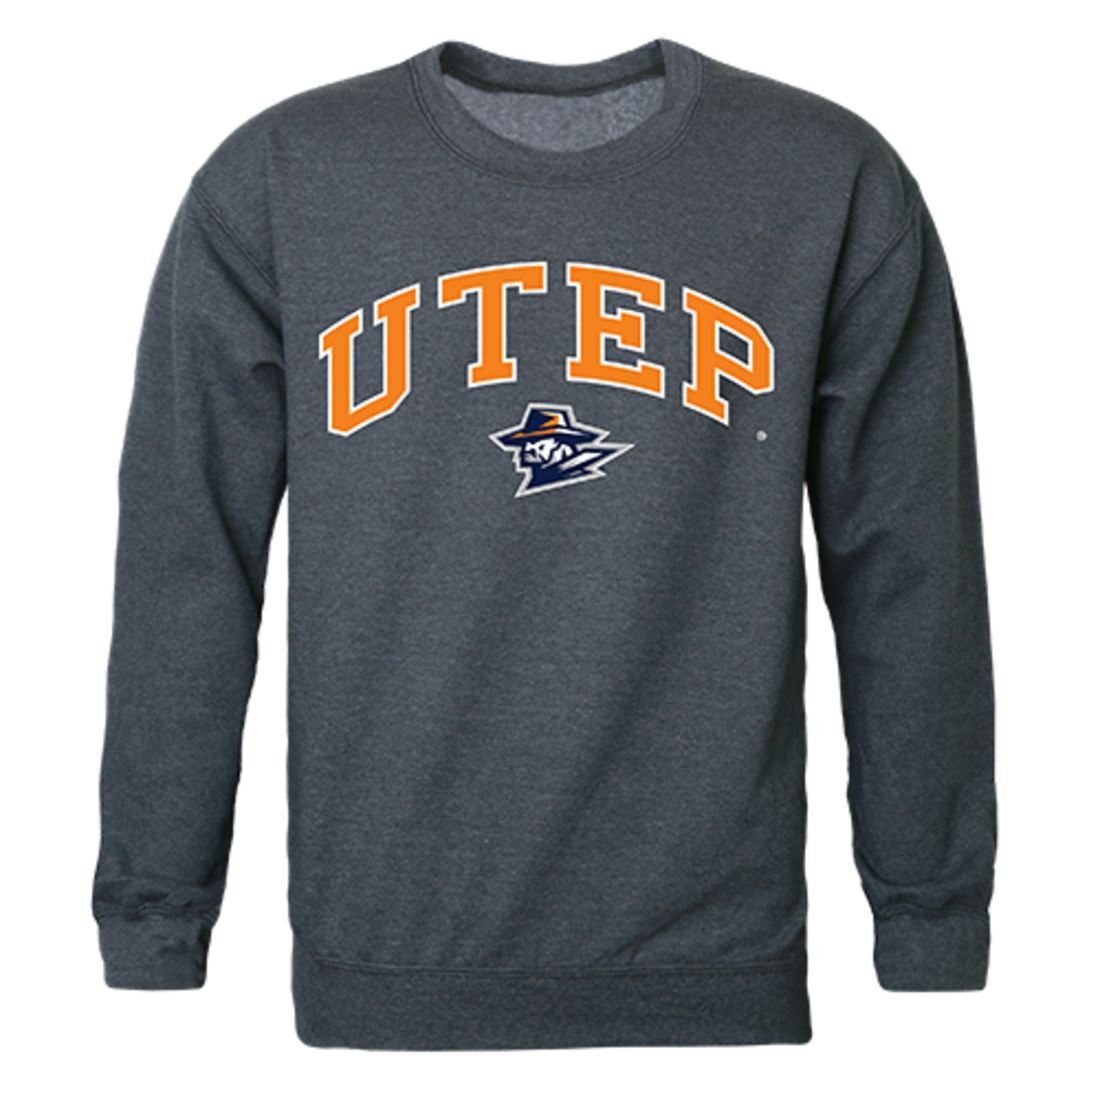 UTEP University of Texas at El Paso Campus Crewneck Pullover Sweatshirt Sweater Heather Charcoal-Campus-Wardrobe